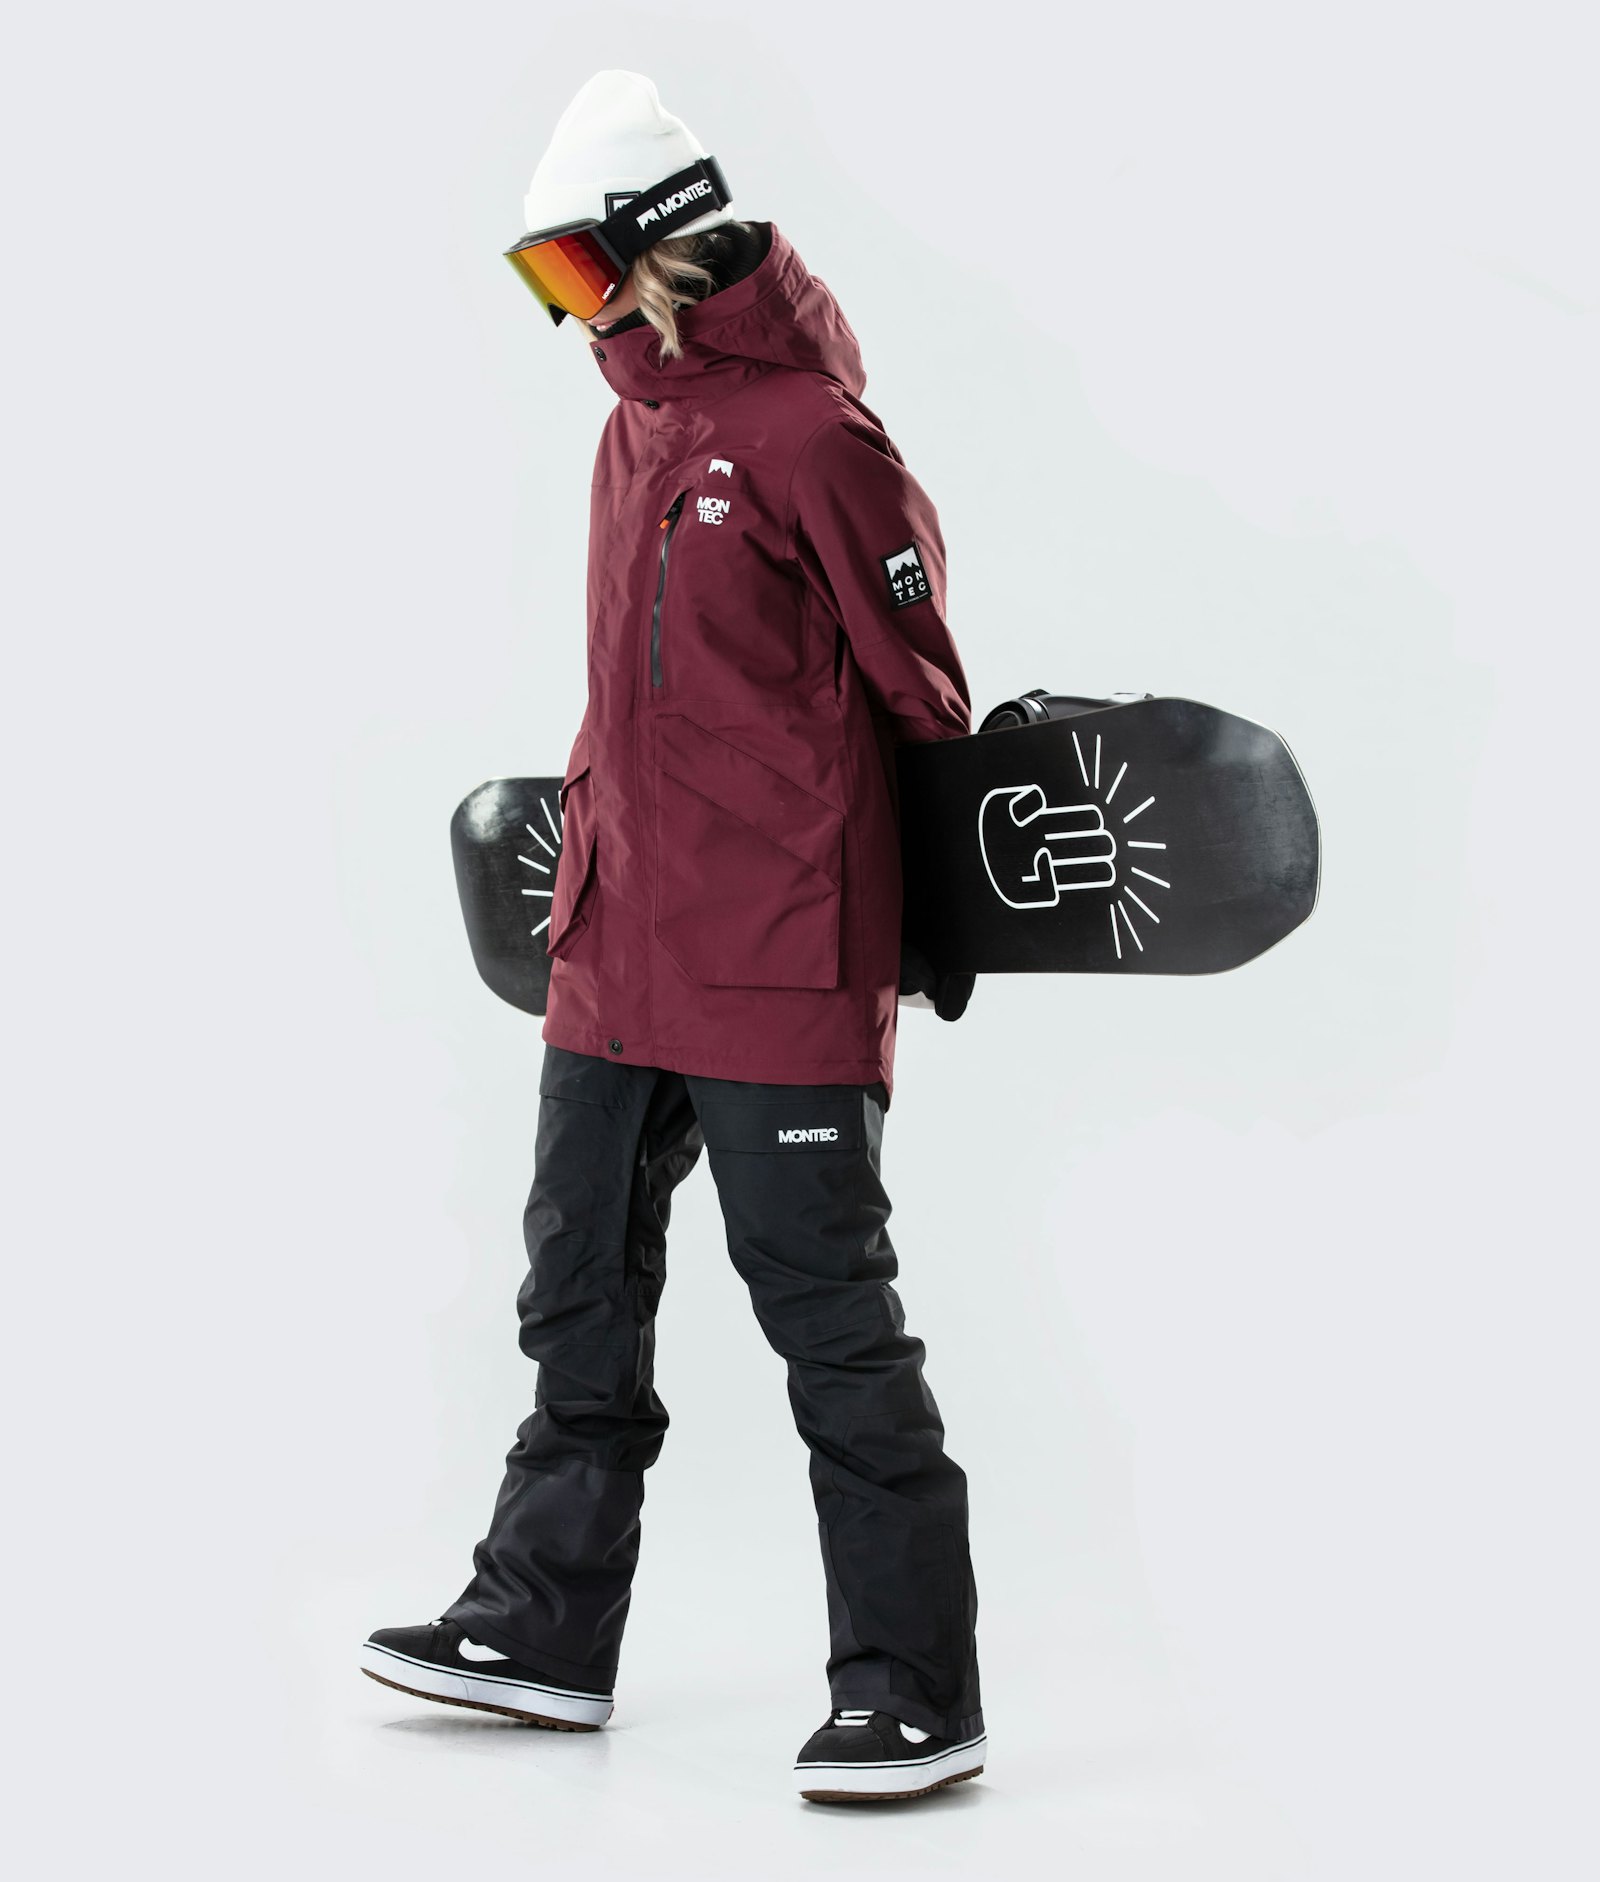 Virago W 2020 Veste Snowboard Femme Burgundy